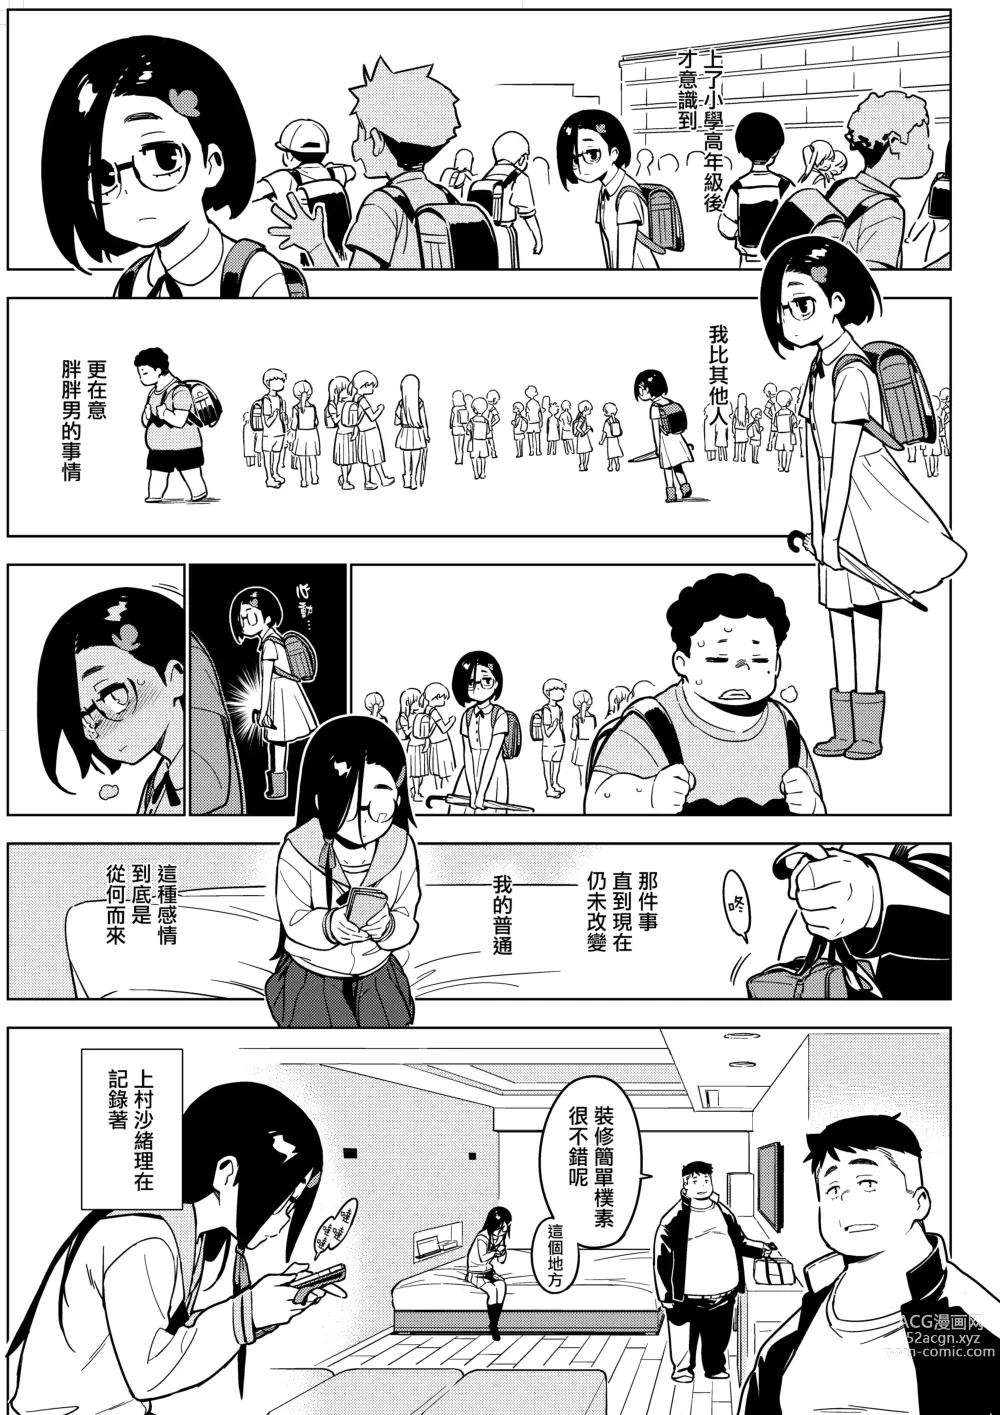 Page 5 of doujinshi Saori